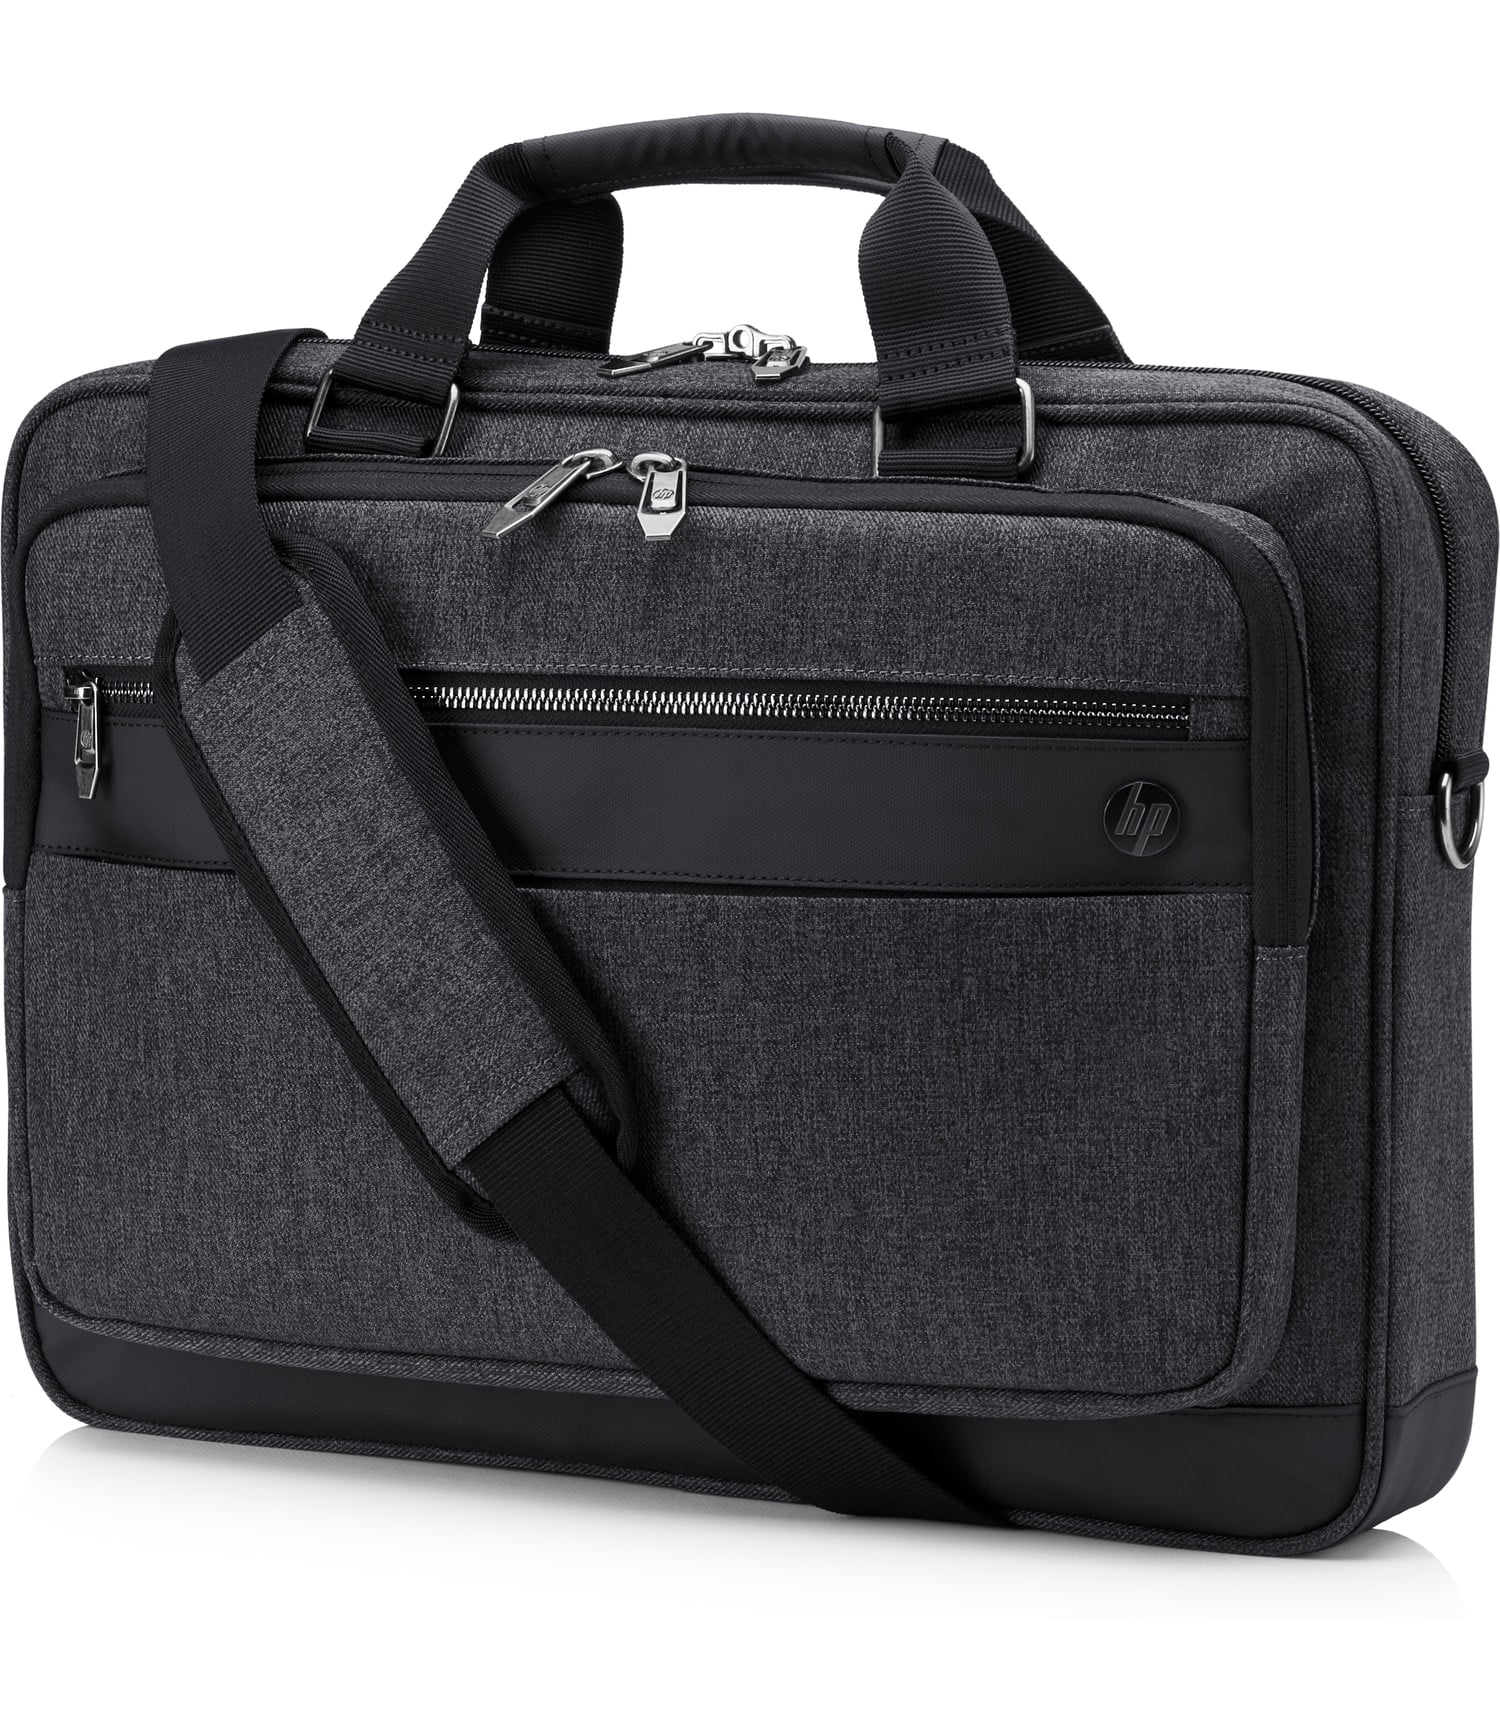 HP Unisex Bag 19.5 litres Laptop Backpack Grey - Price in India |  Flipkart.com